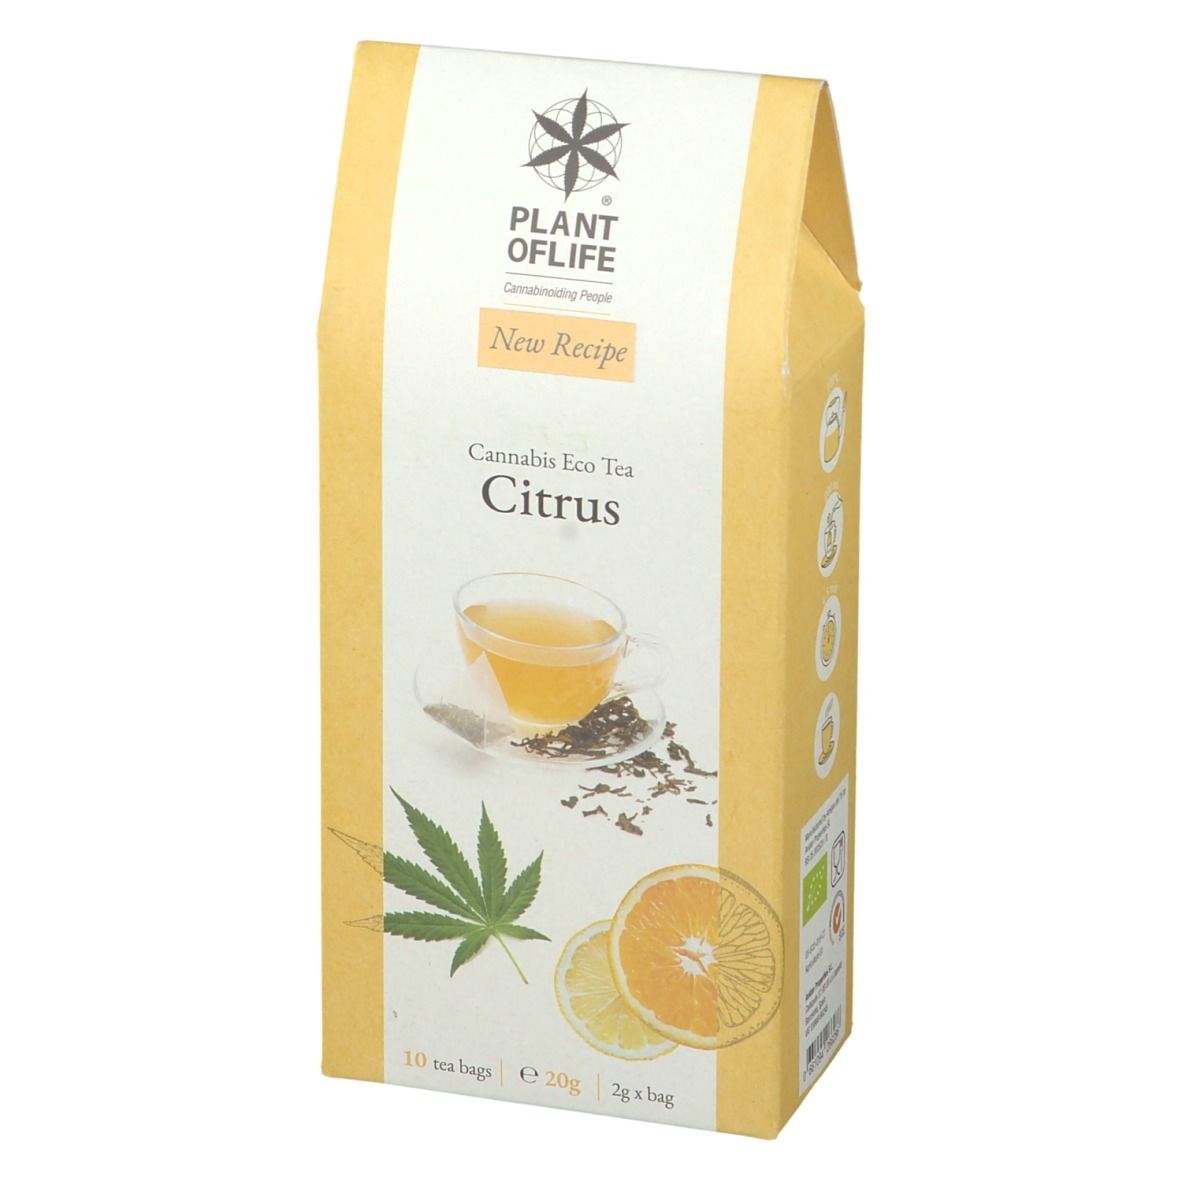 PLANTOFLIFE Cannabis Tea Citrus